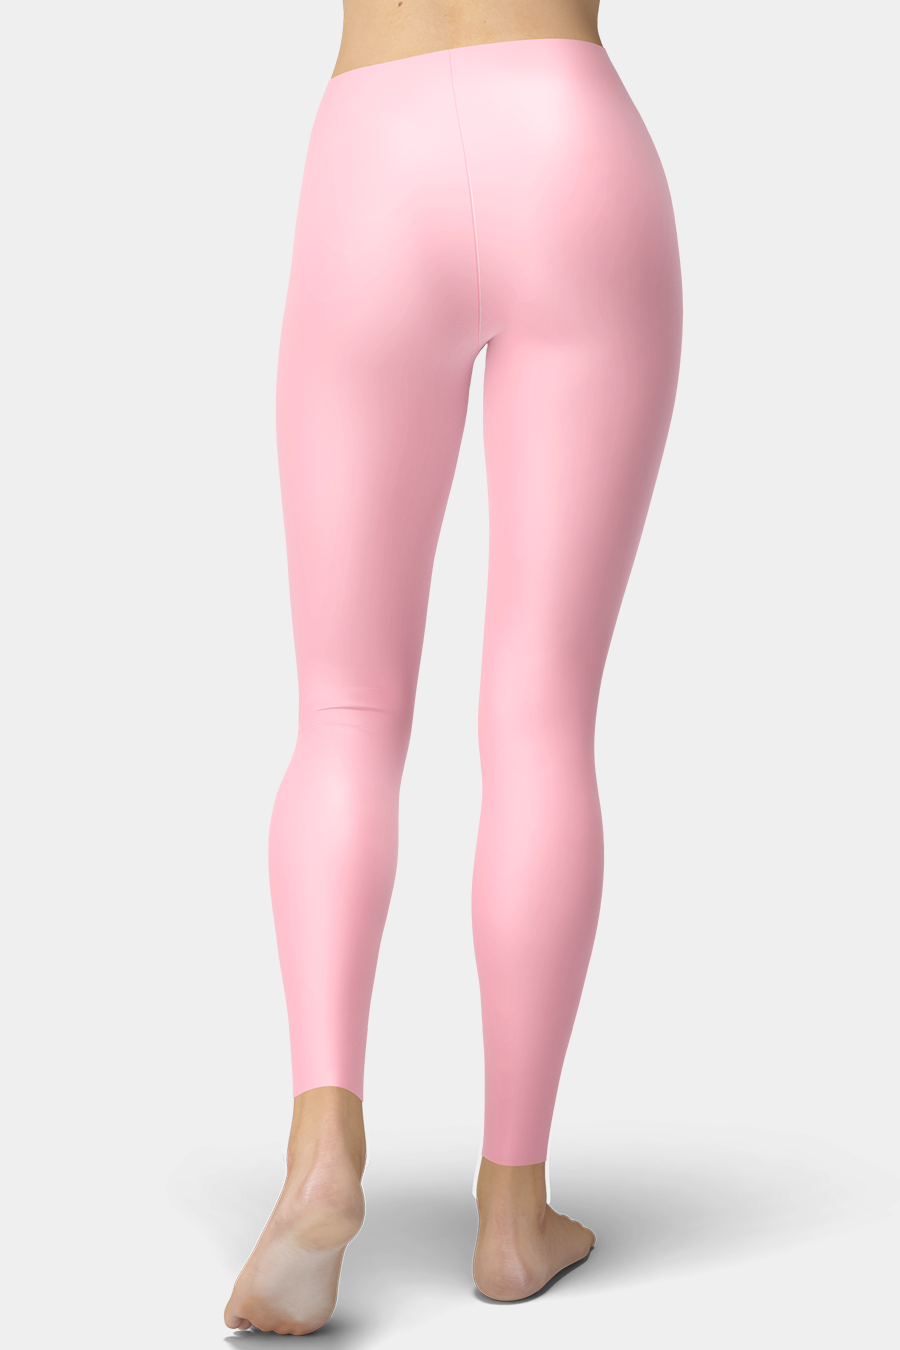 Bubblegum Pink Leggings - SeeMyLeggings